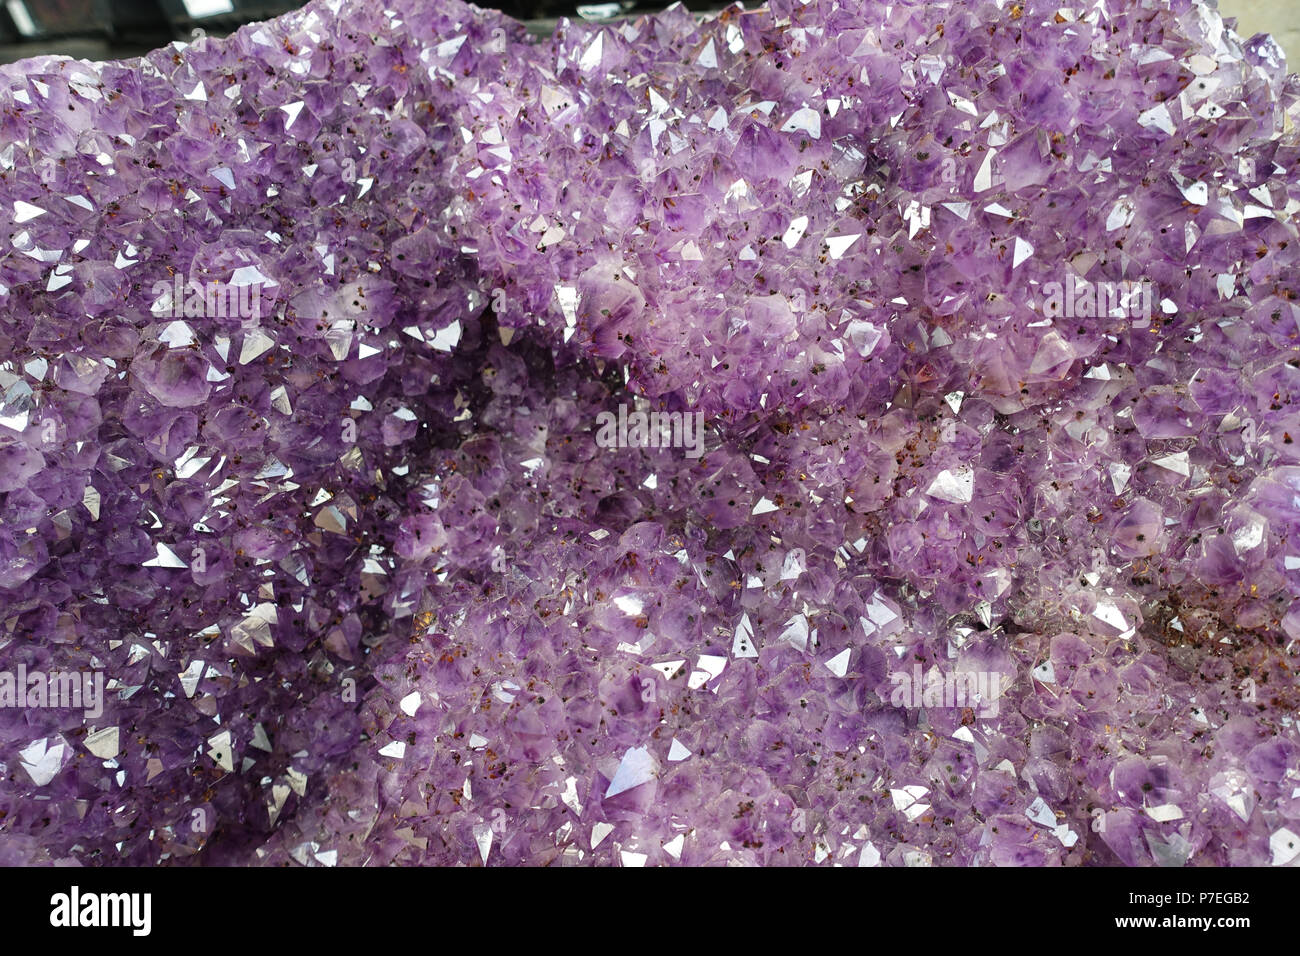 Amethyst crystal caves on display Stock Photo